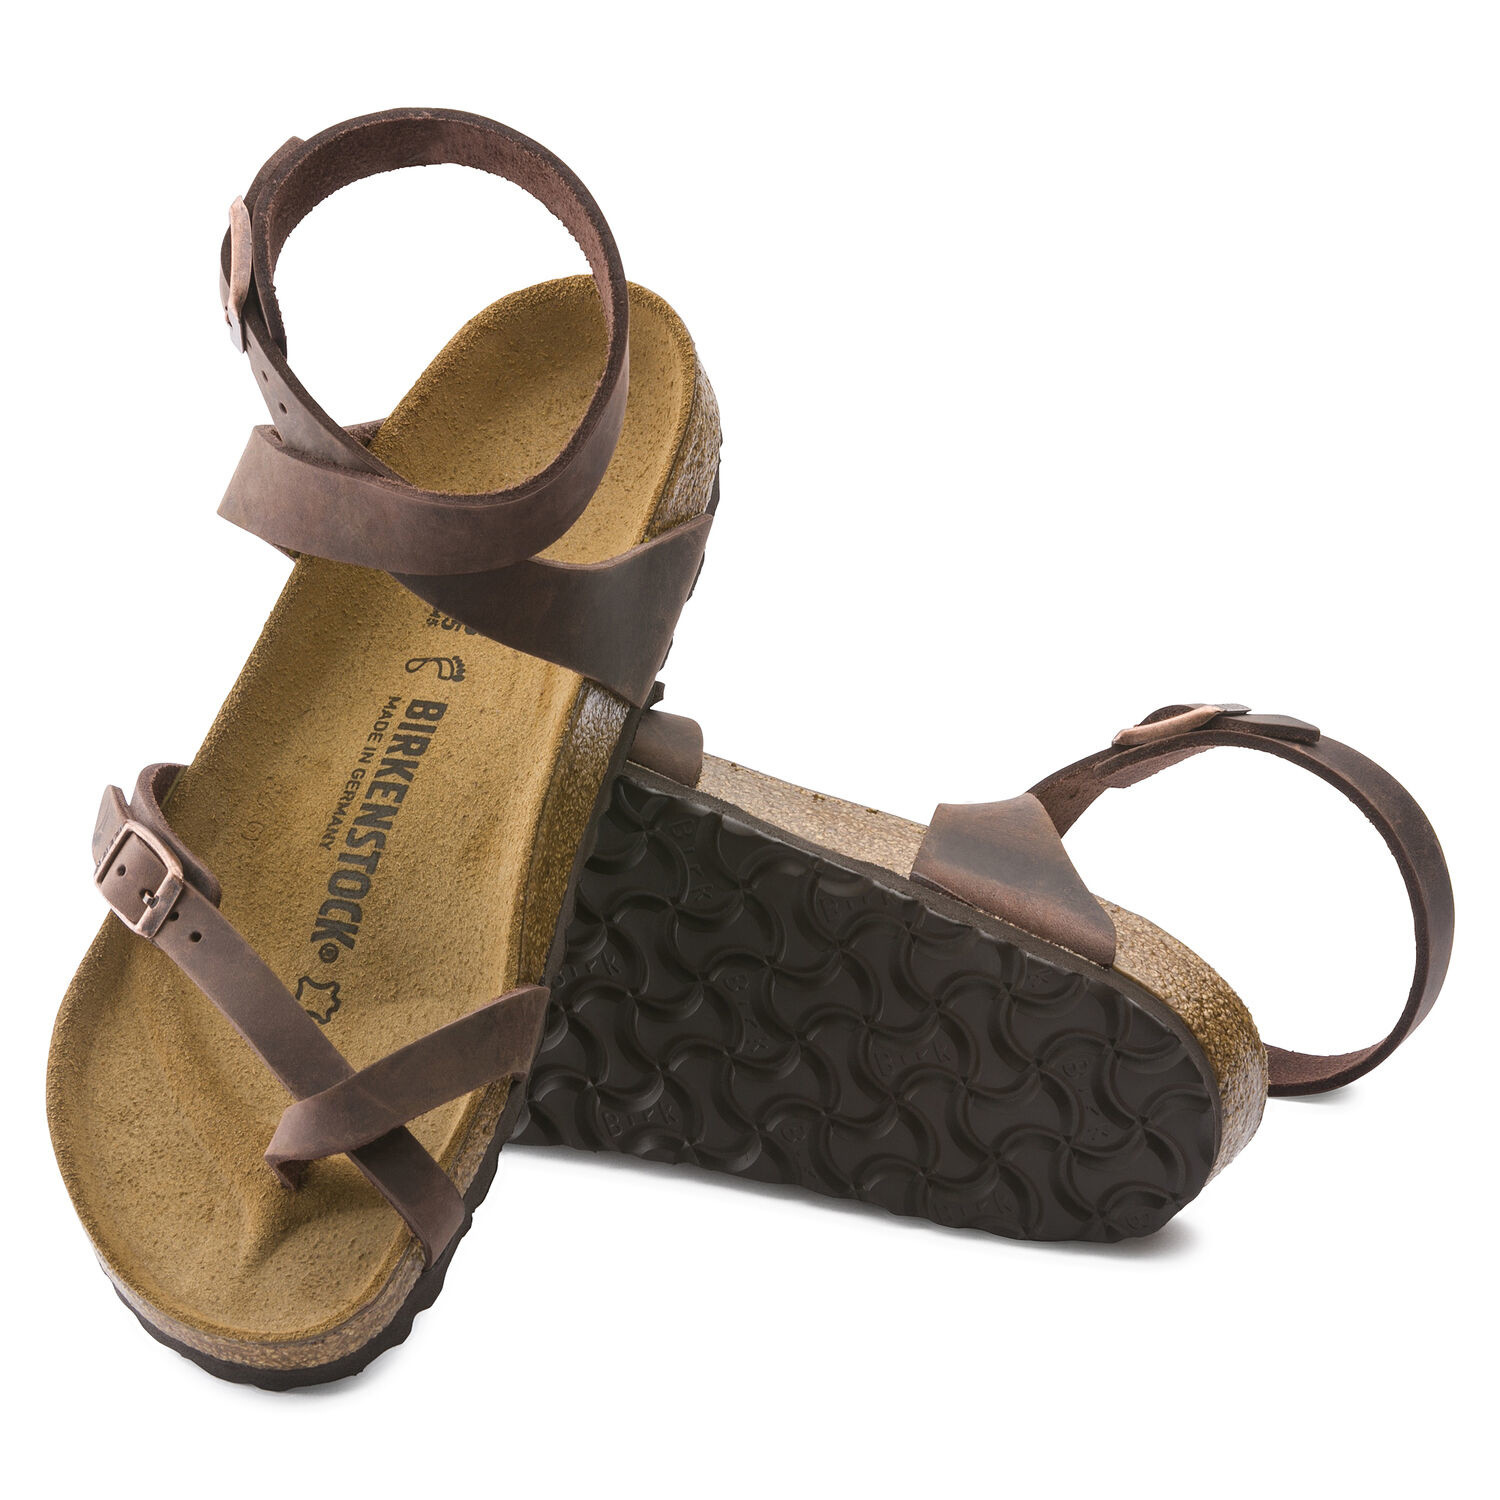 birkenstock yara habana oiled leather sandals